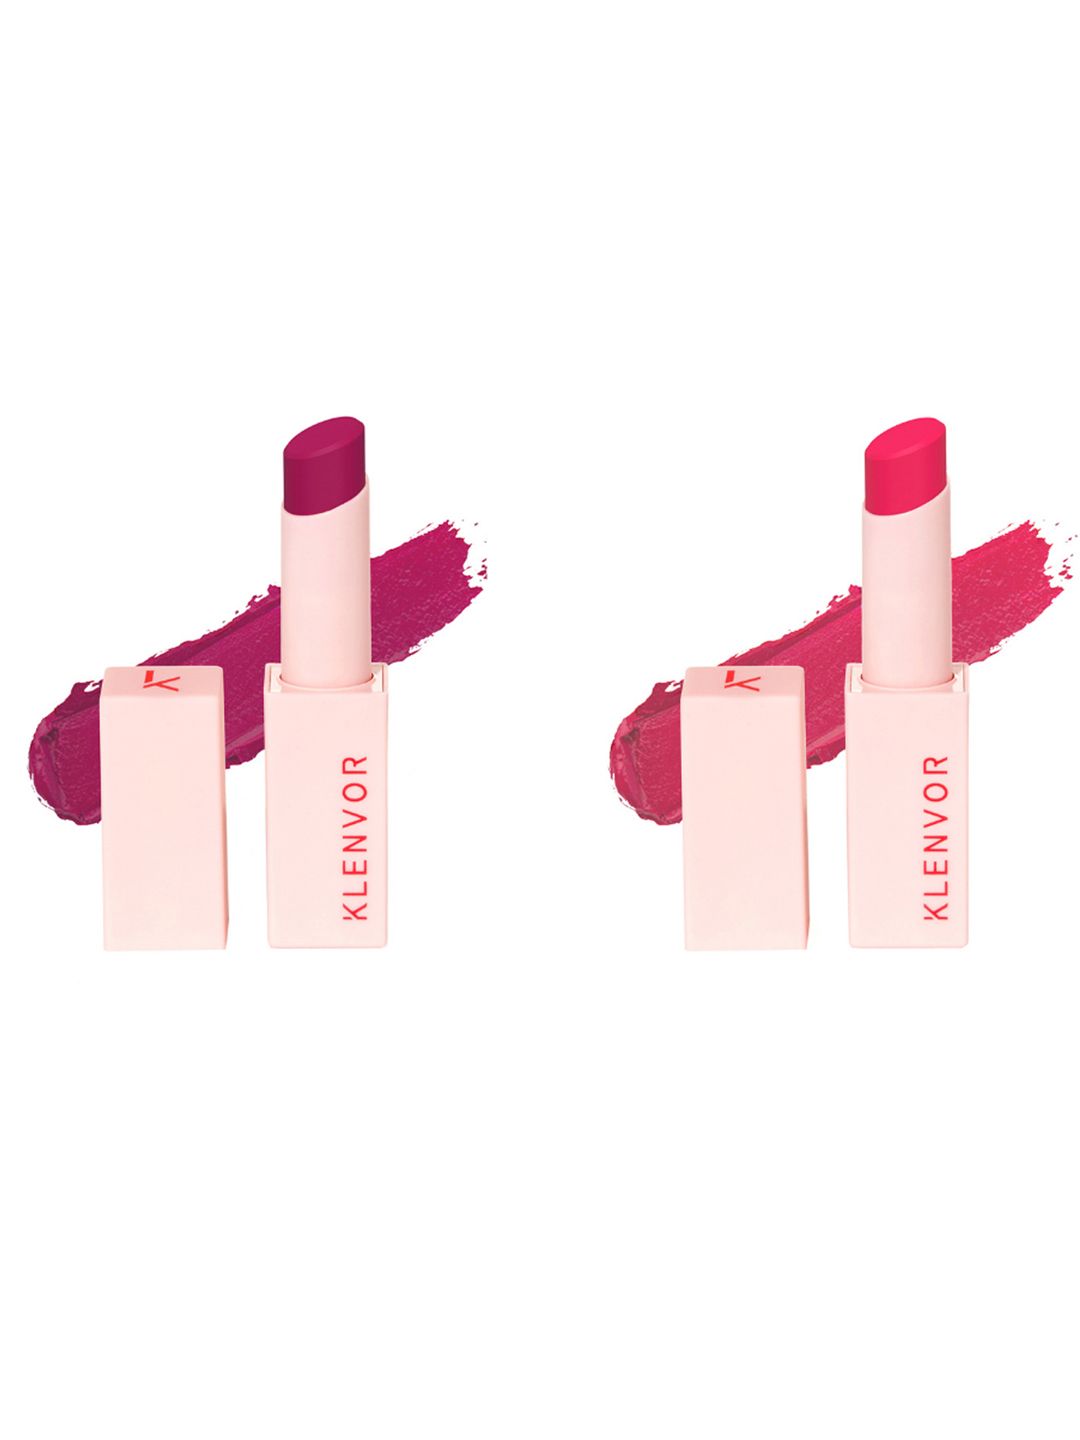 KLENVOR Pink Collection - Matte Lipsticks 8g Price in India